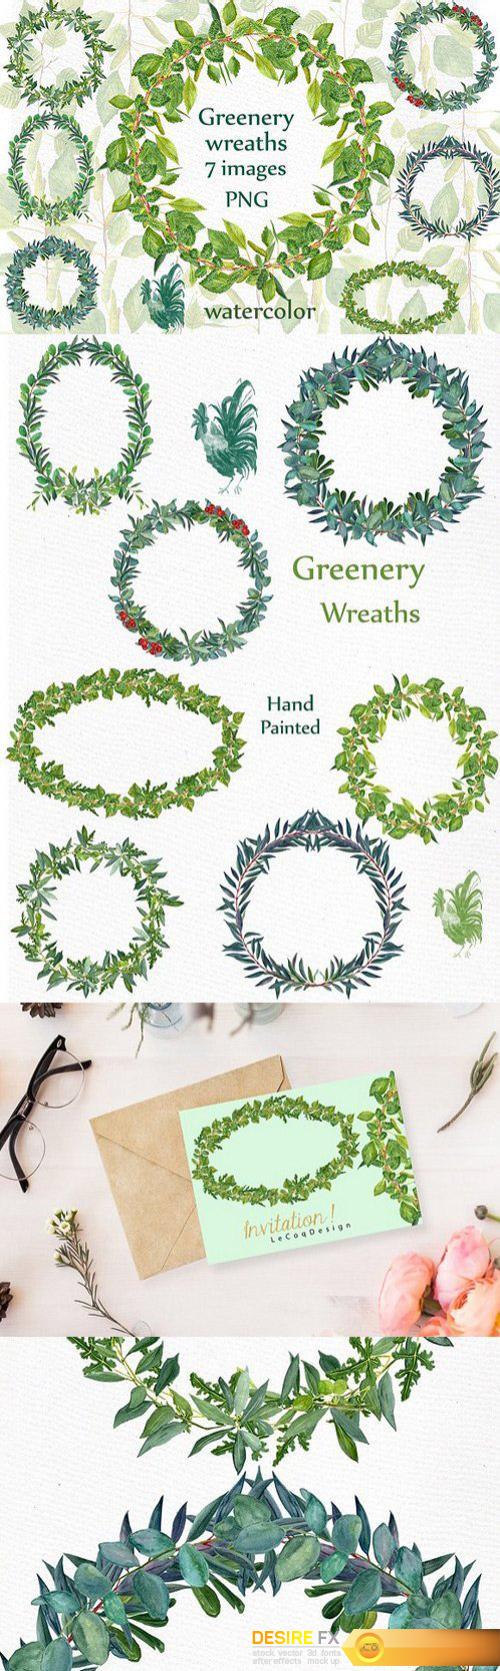 CM - Watercolor Fern Wreaths clipart 1697763